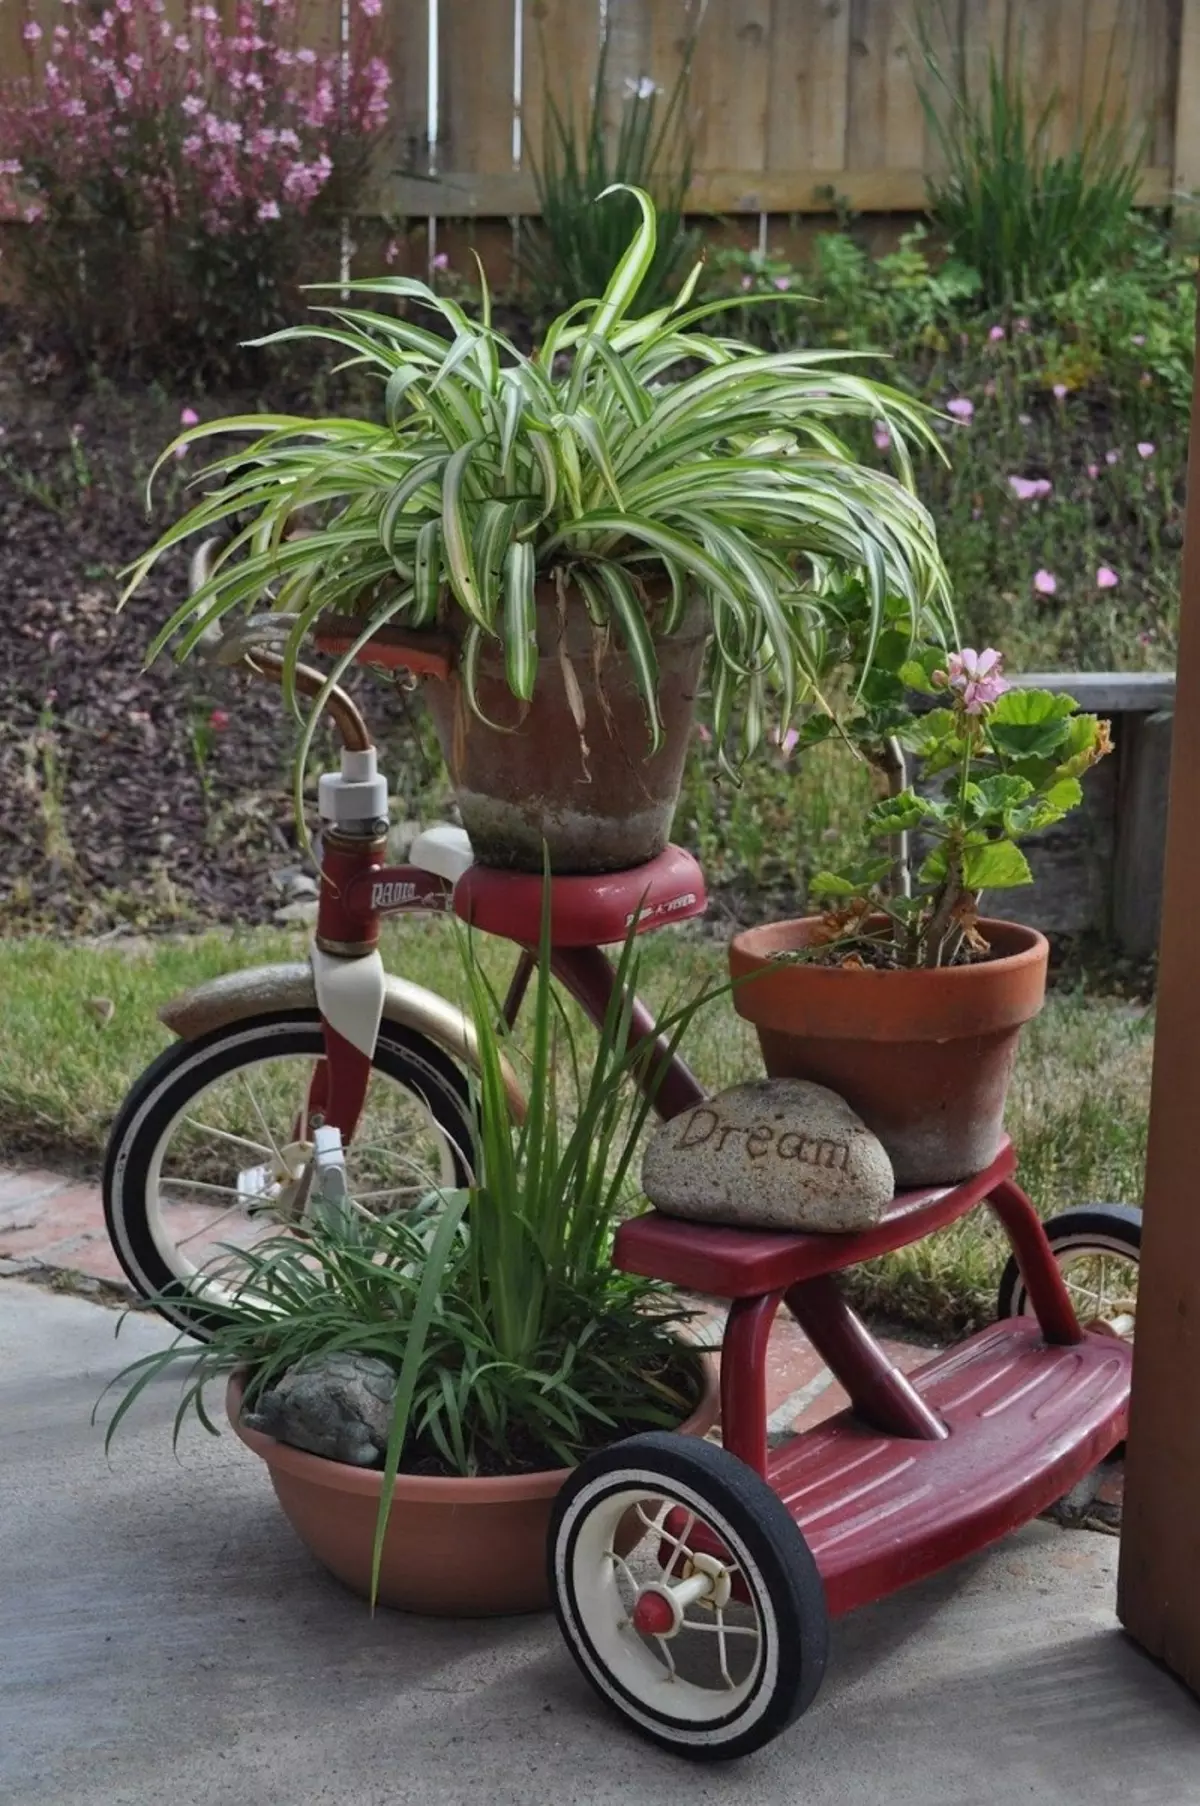 Ou fiets in tuinontwerp (50 foto's): fiets blombedding en cachet fiets met blomme in landskap-ontwerp by die huis 8522_12